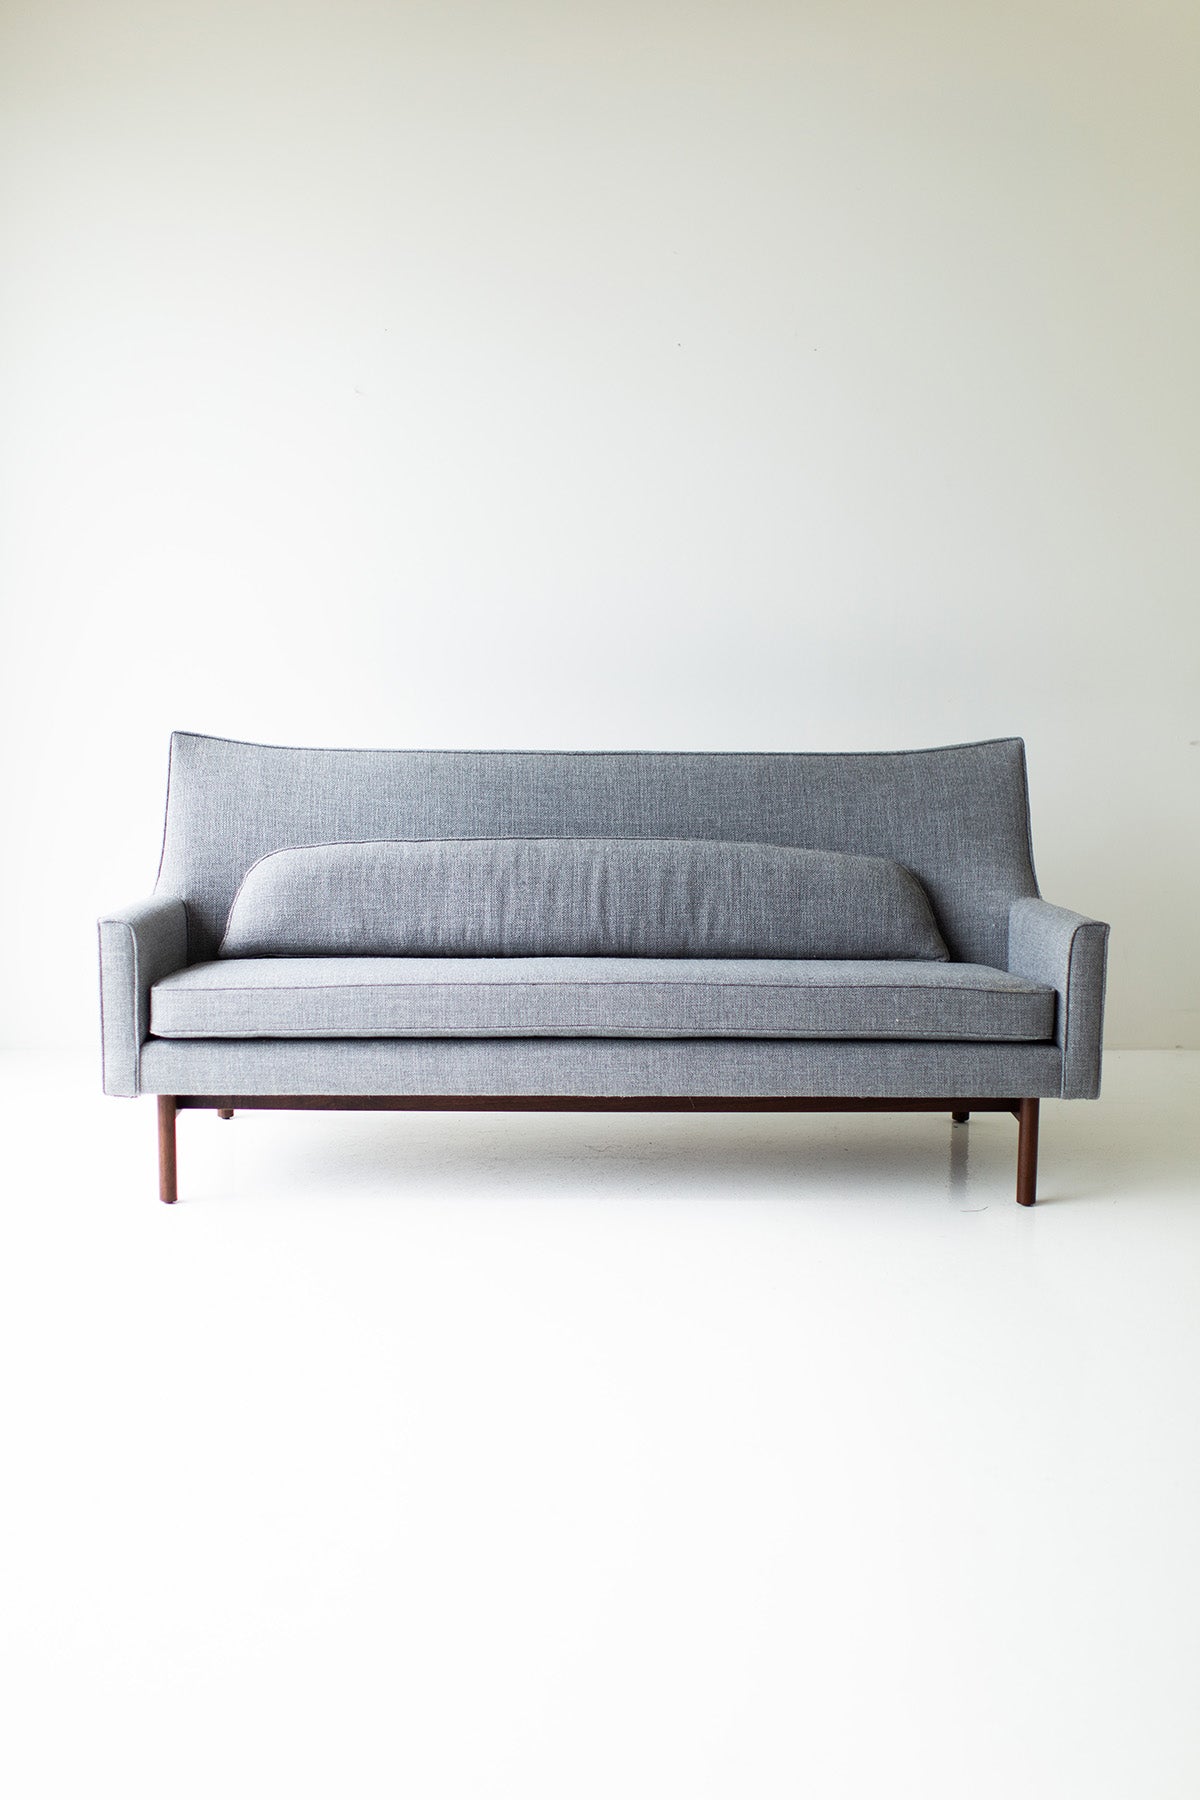 Lawrence Peabody Bracket Back Sofa for Craft Associates - 2203P